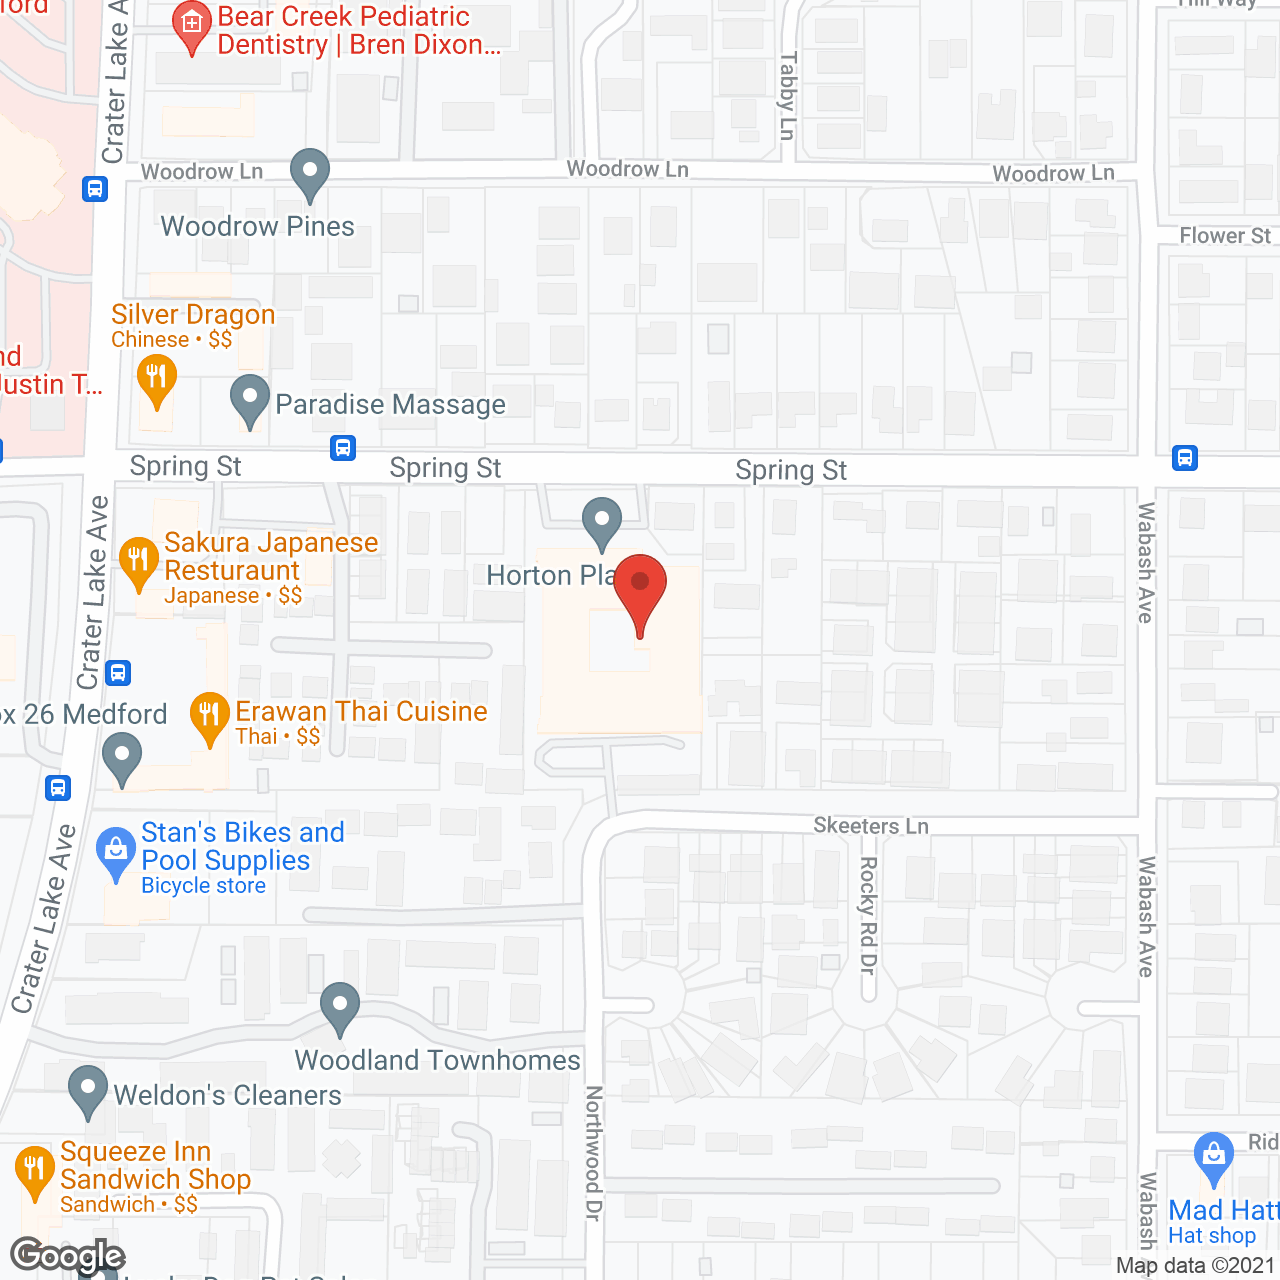 Horton Plaza in google map